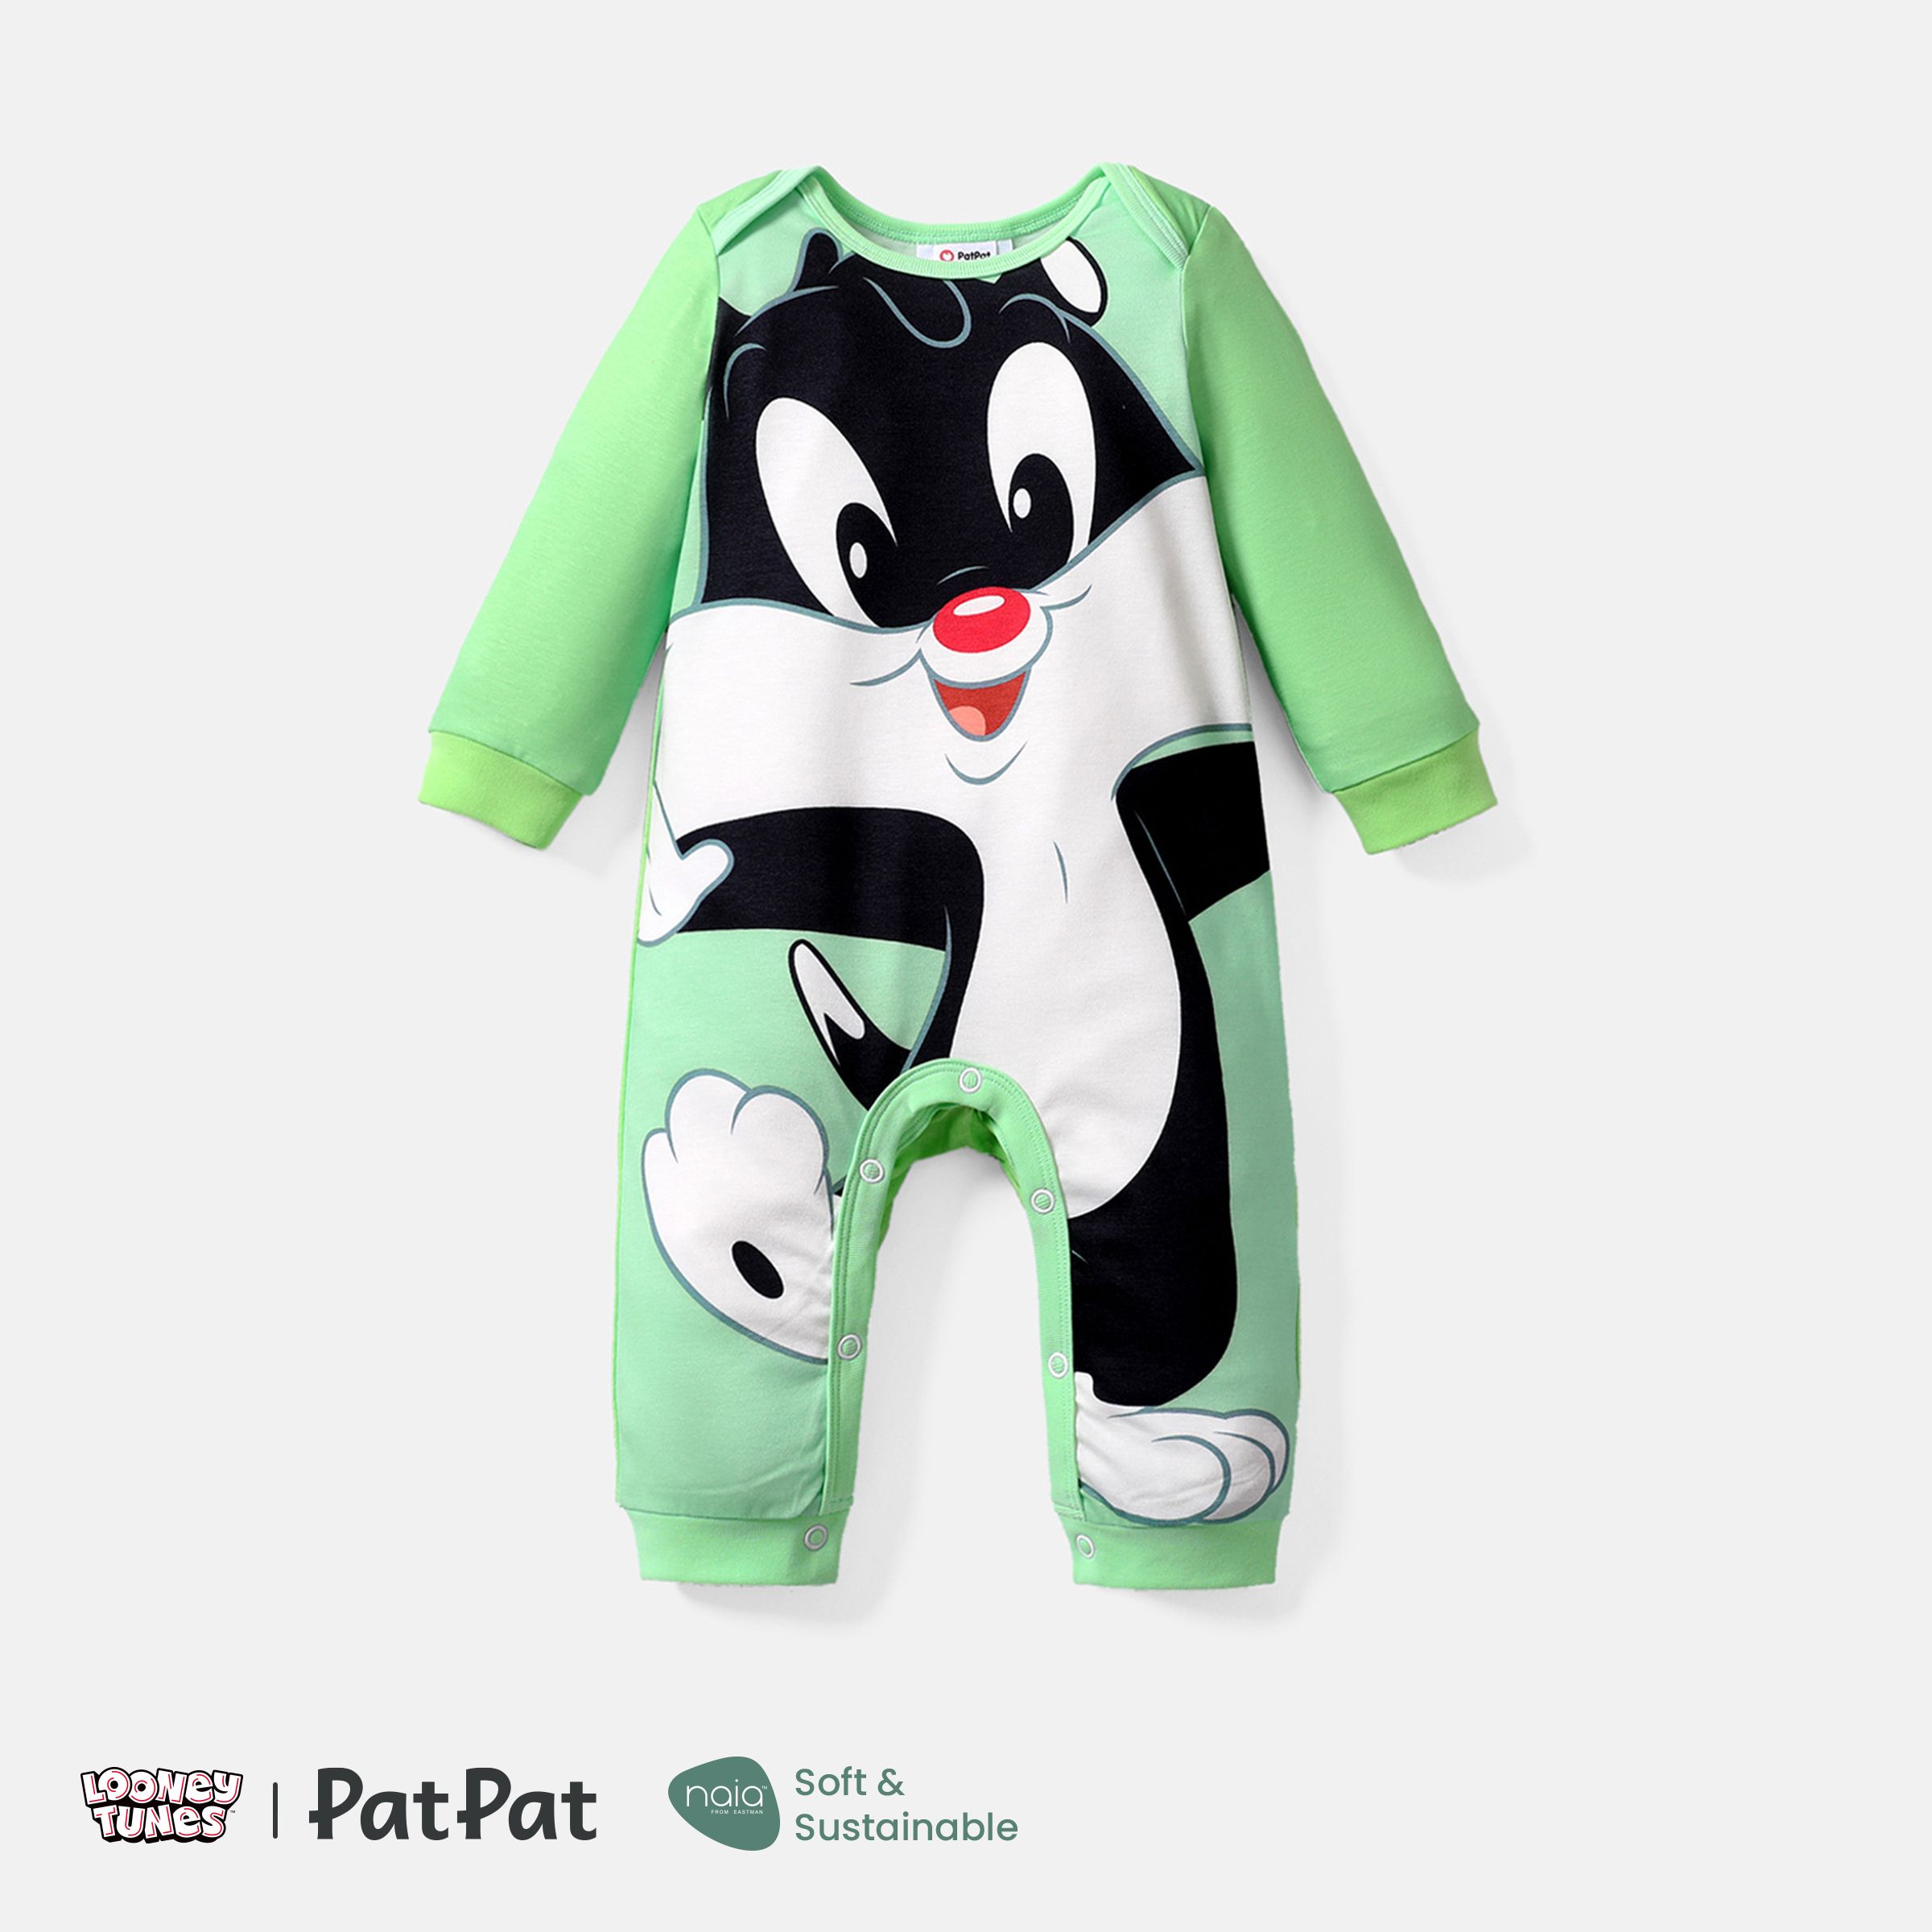 Looney Tunes Baby Boy/Girl Cartoon Animal Print Short-sleeve Jumpsuit